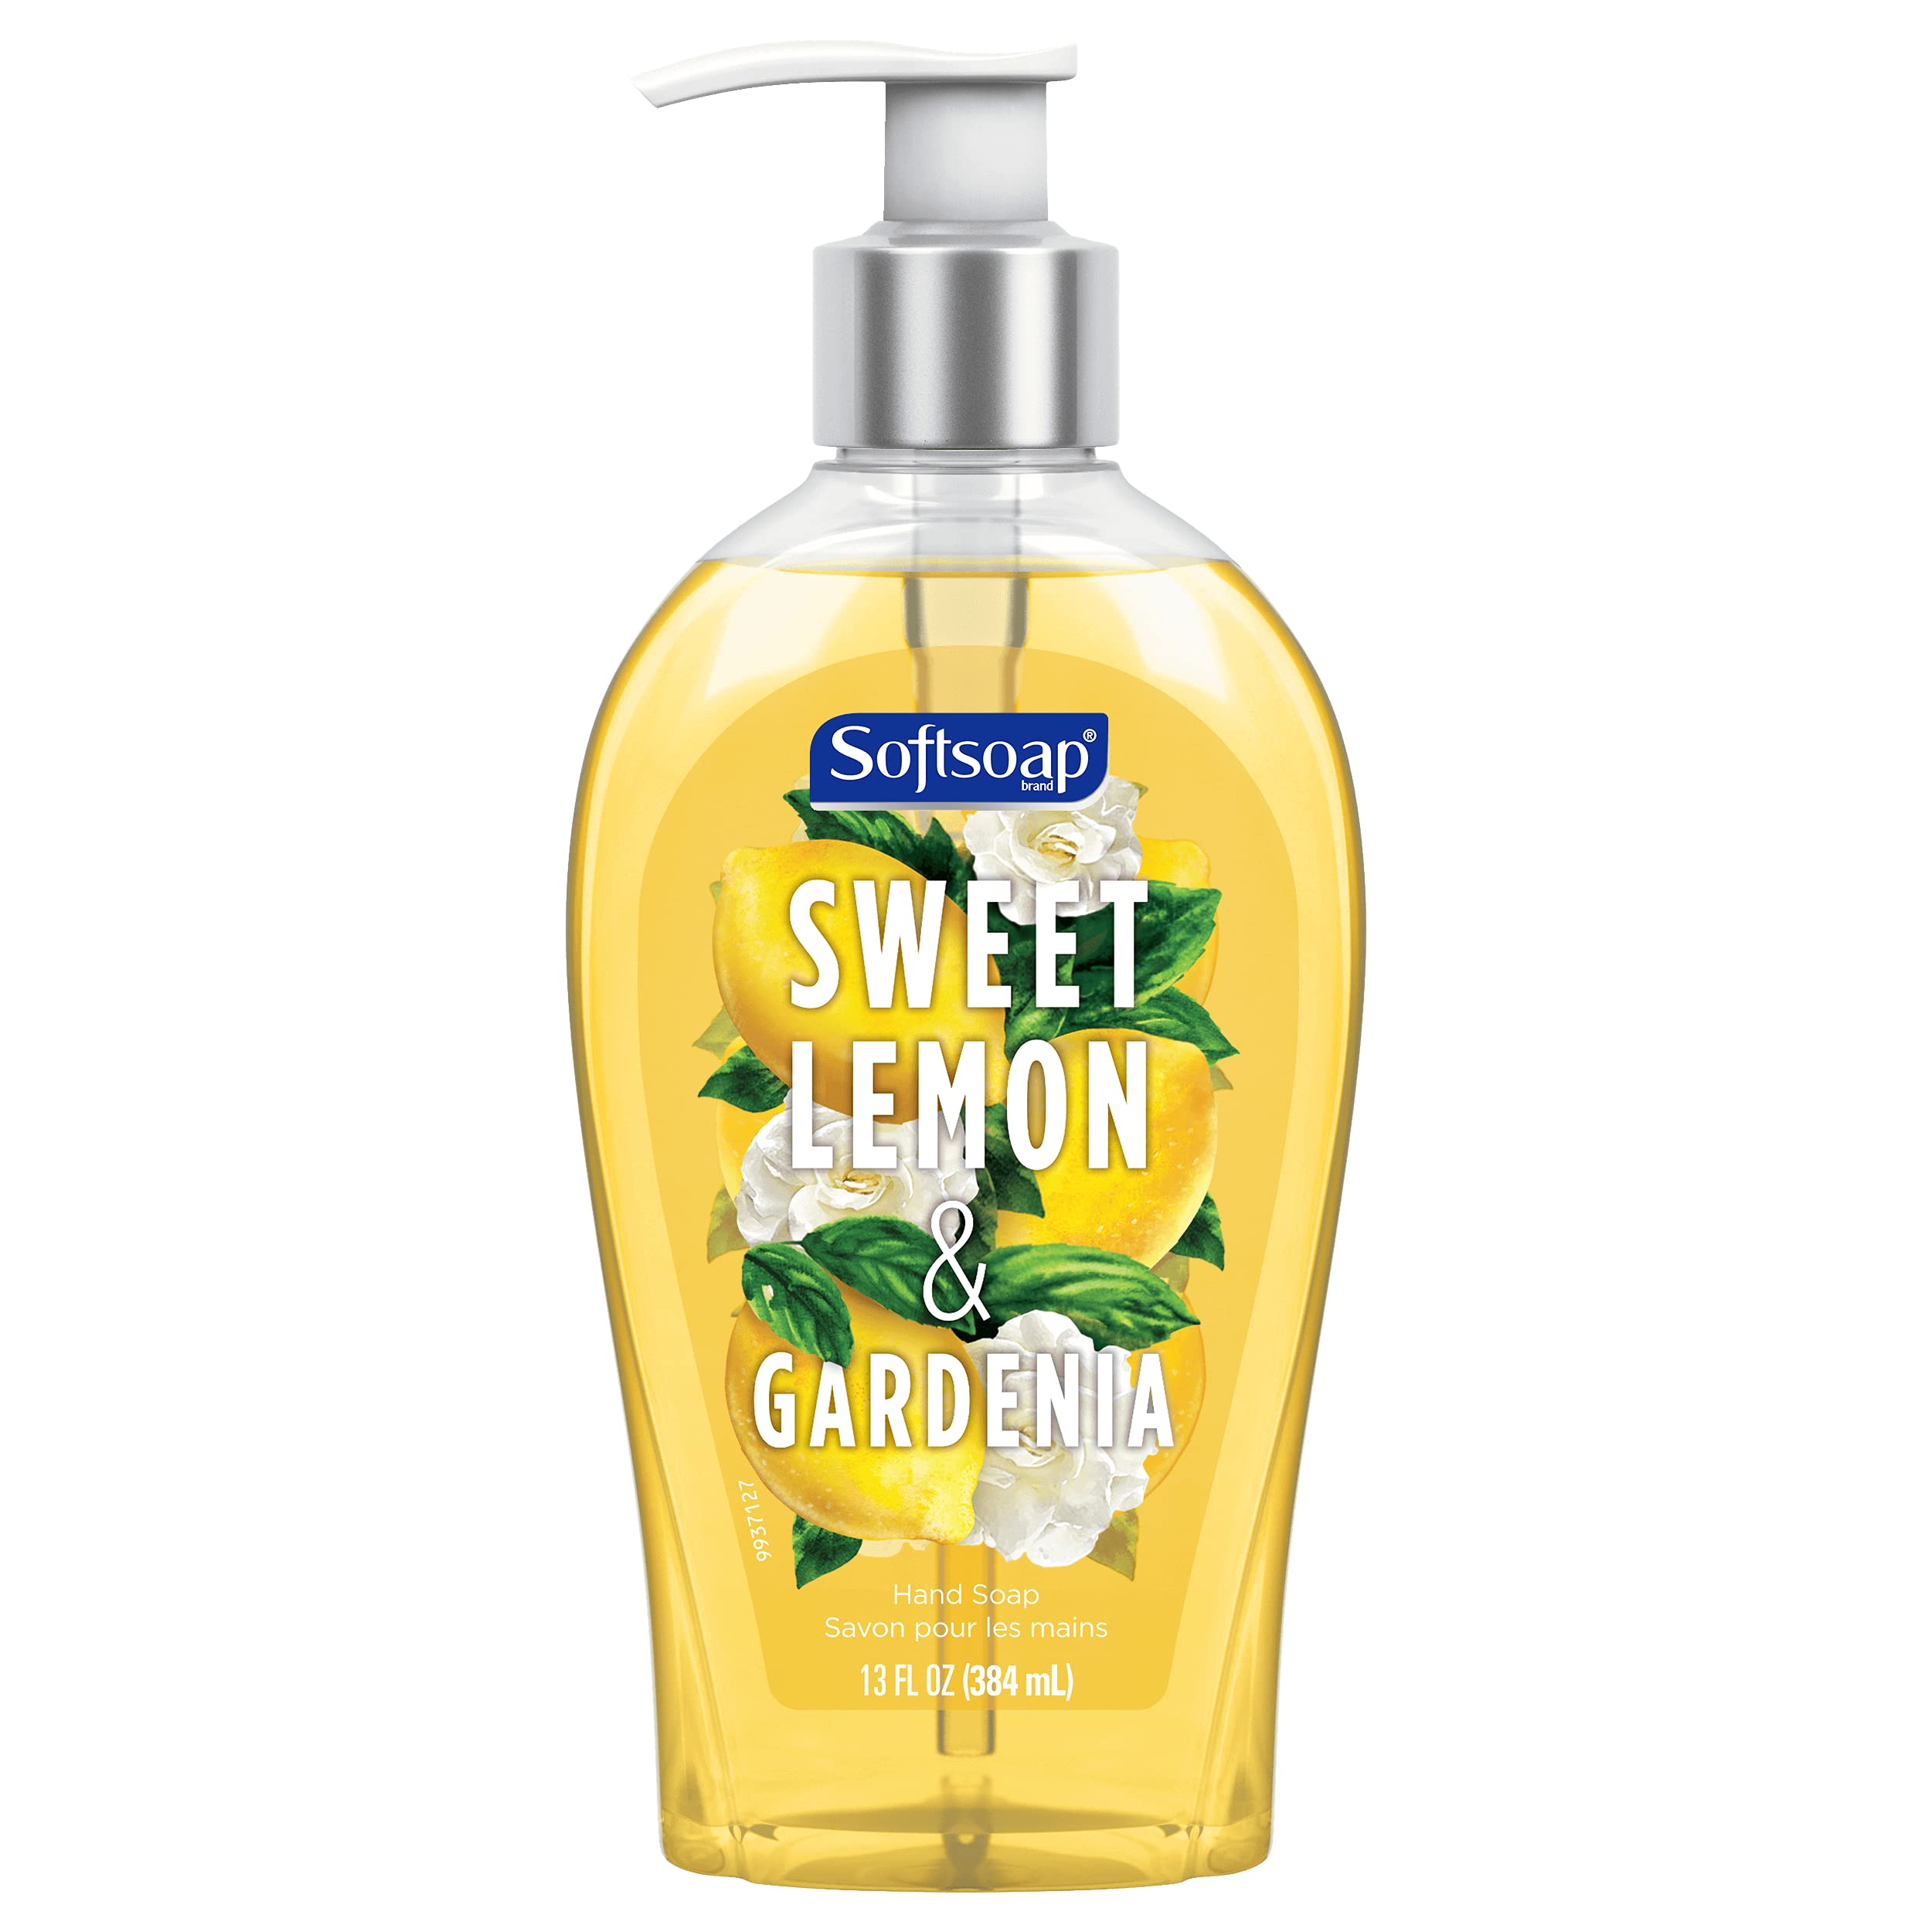 Softsoap Liquid Hand Soap, Sweet Lemon and Gardenia Scent, All Skin Type, 13 fl oz - image 1 of 6